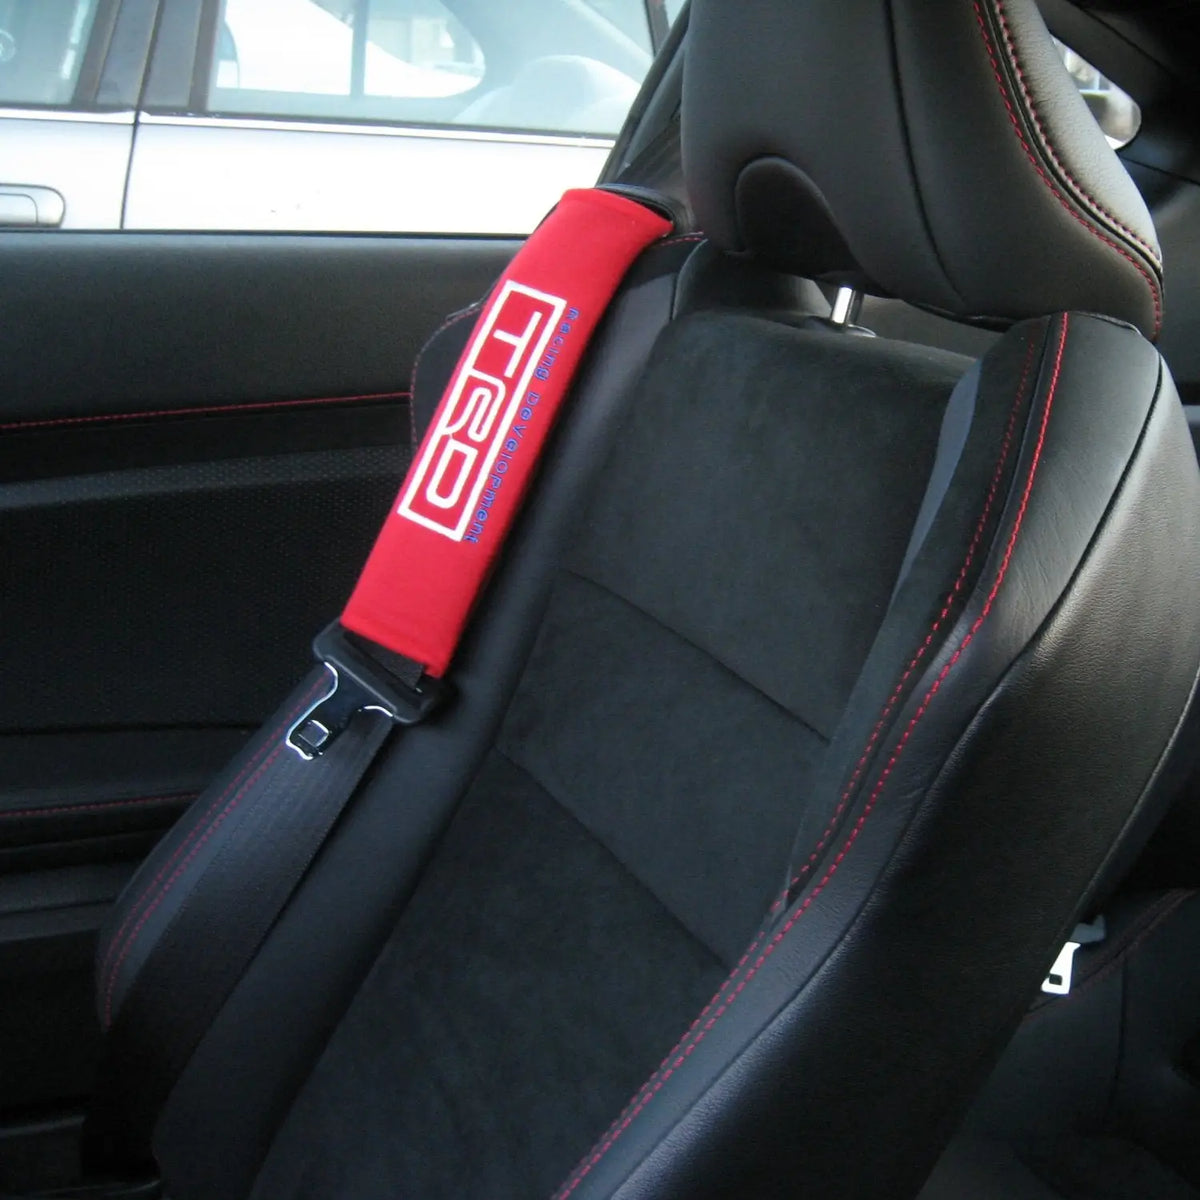 Shop Generic Car Seat Belt Cover Pads Shoulder Cushion Set For Toyota